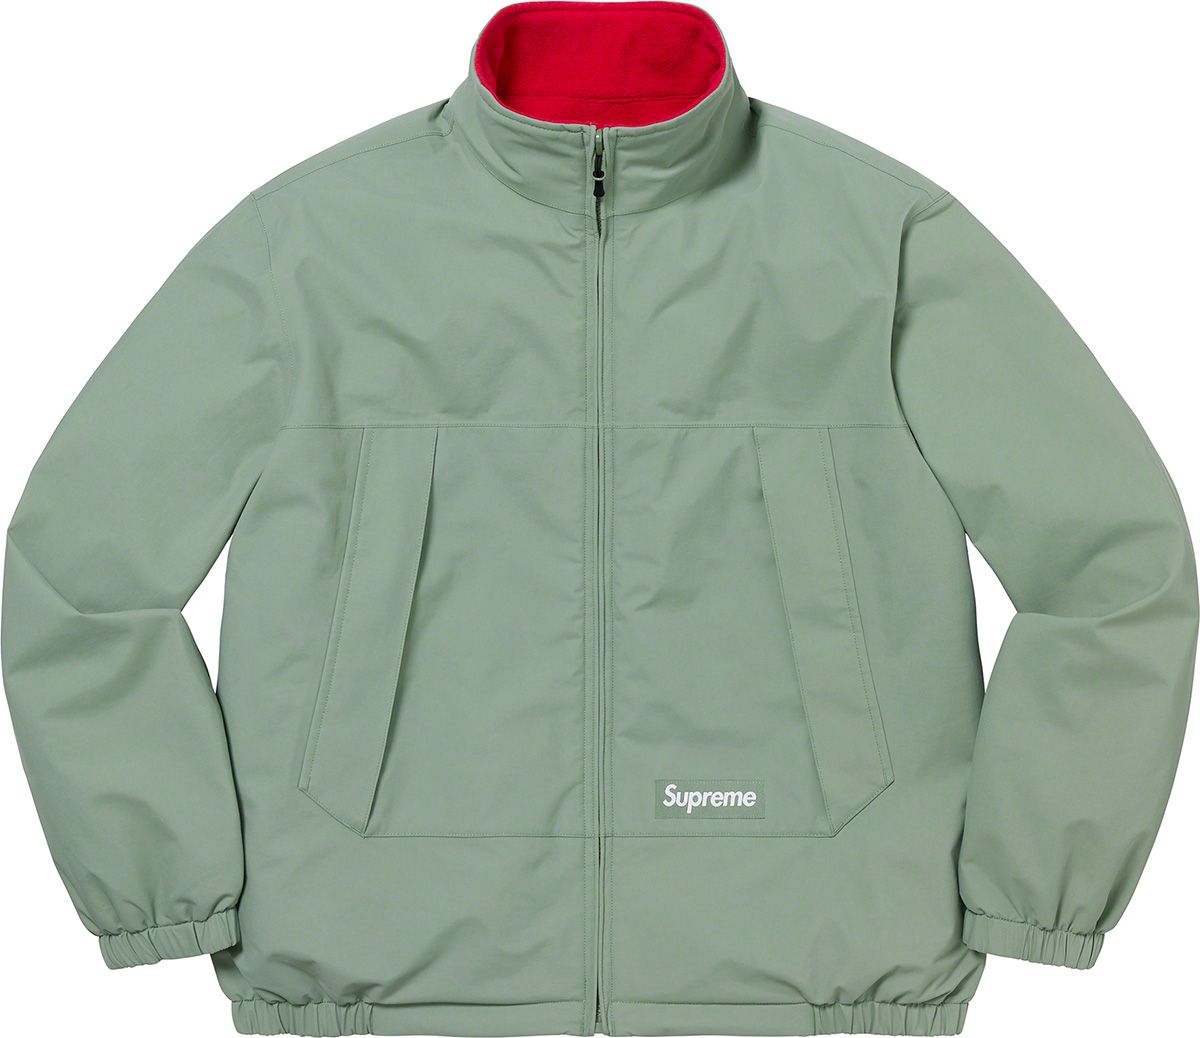 GORE-TEX Reversible Polartec® Lined Jacket - Supreme